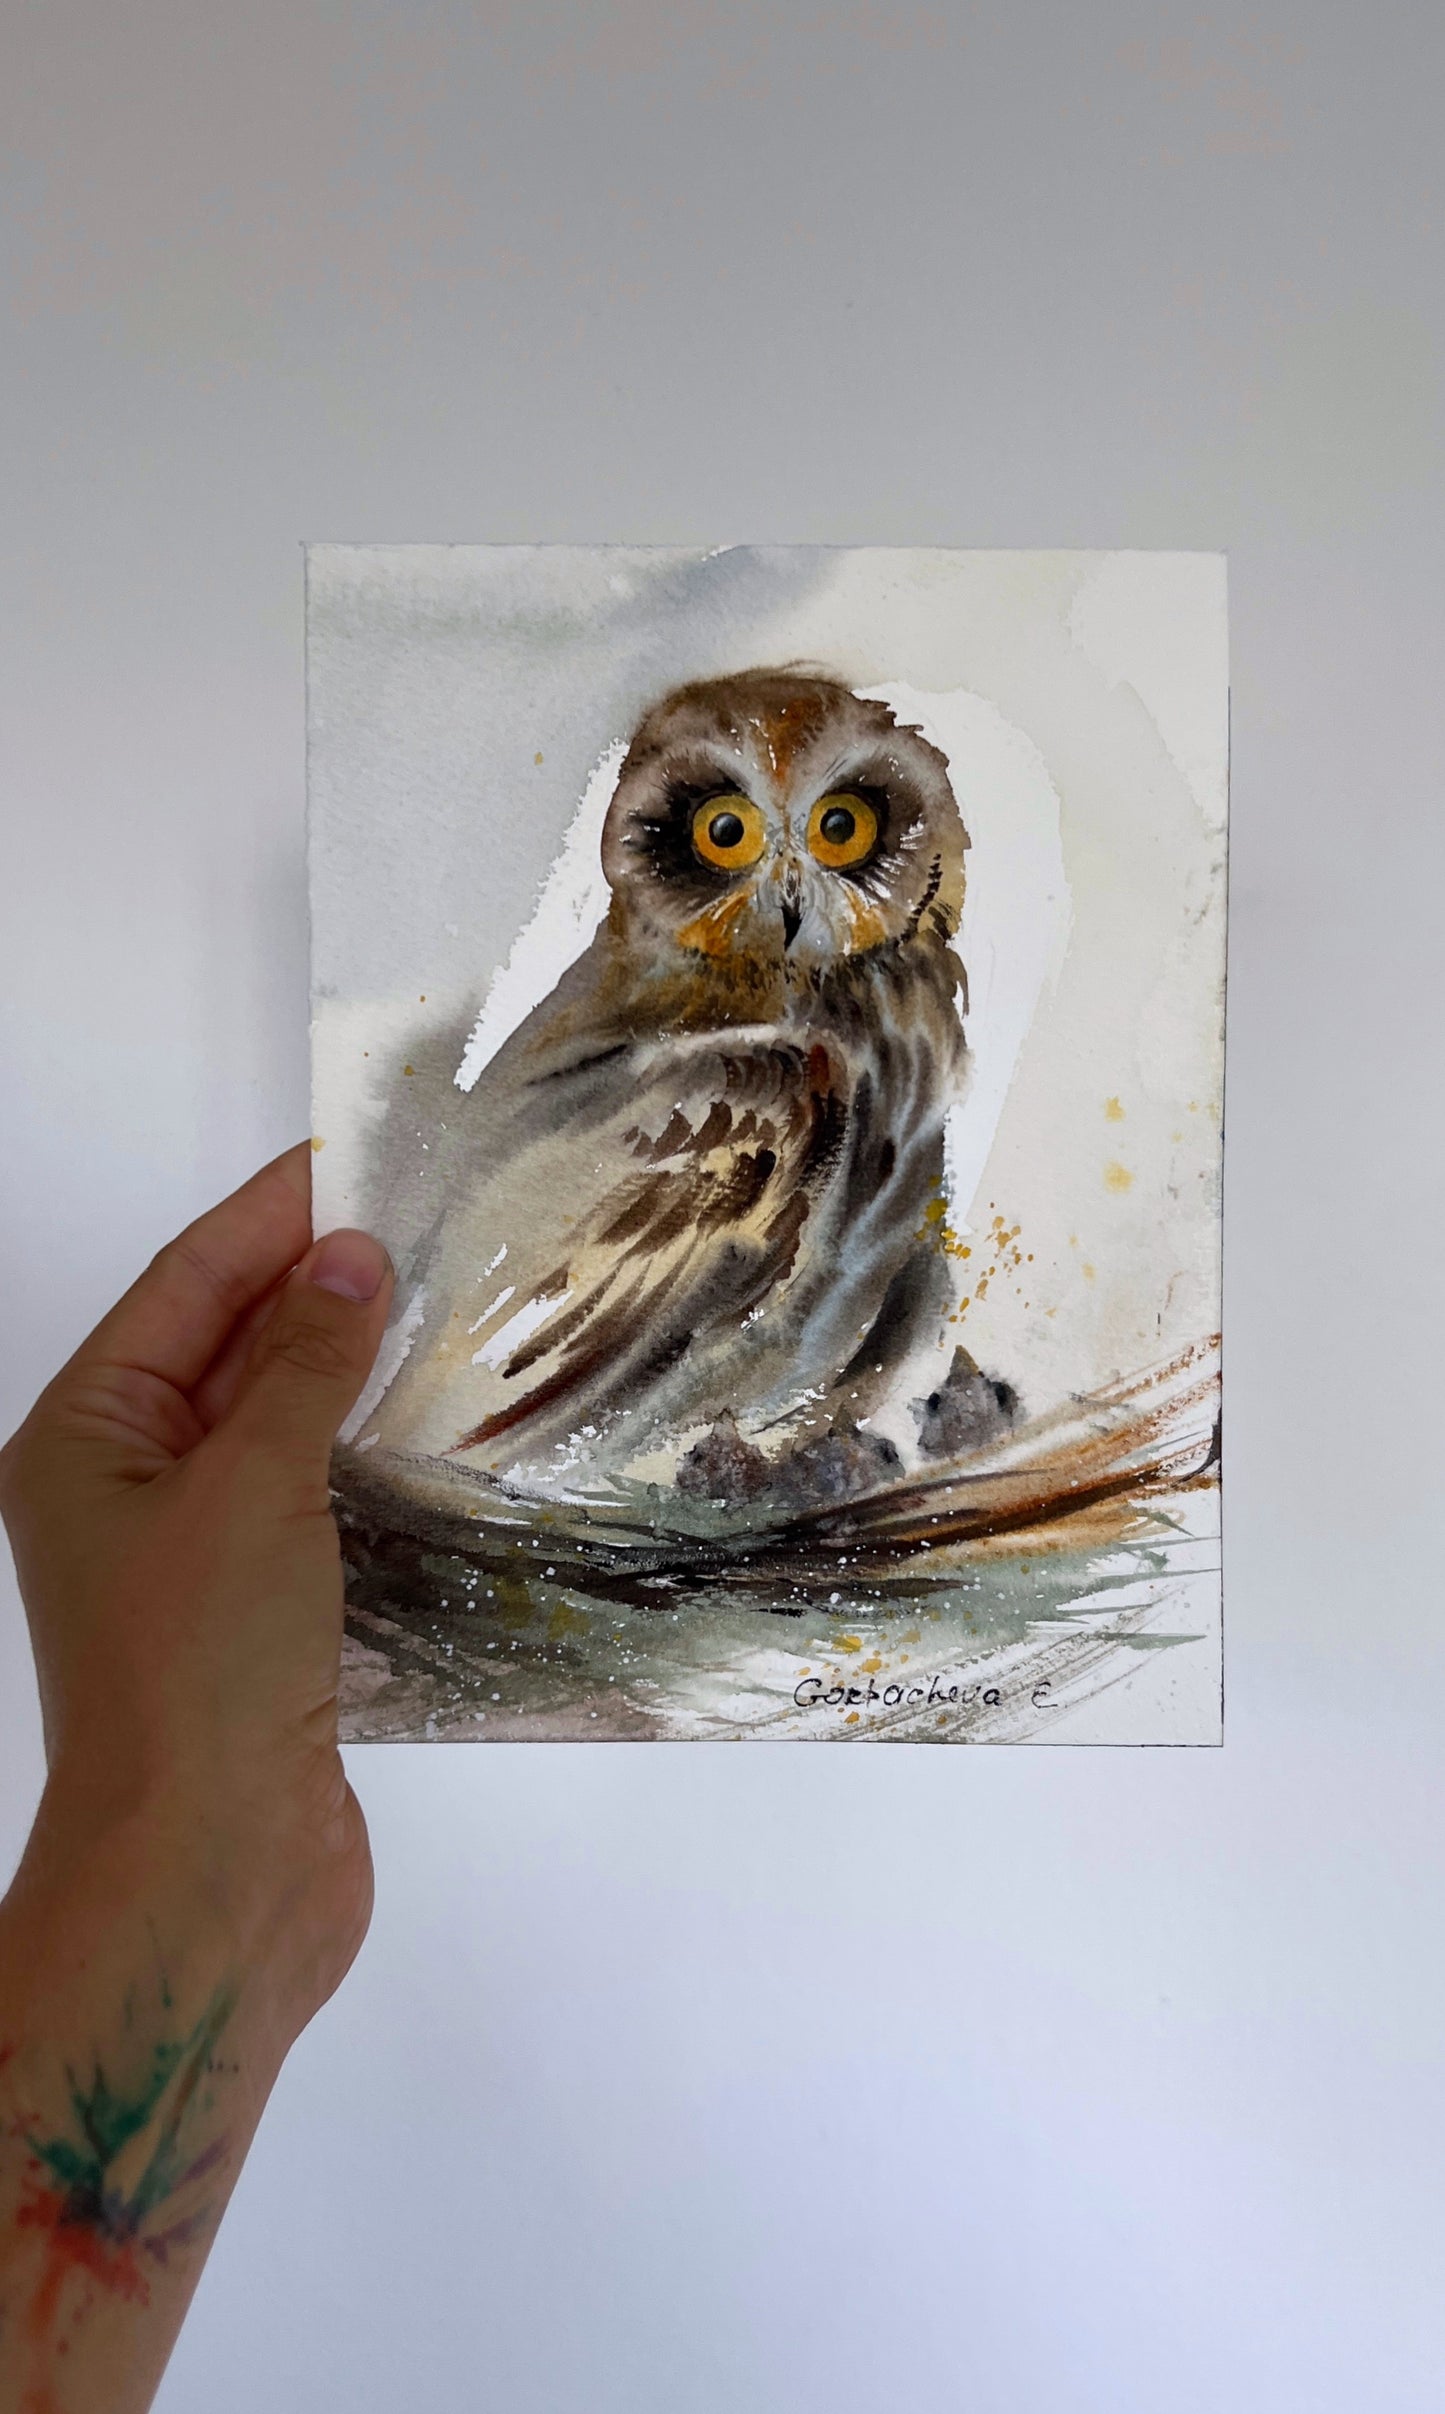 Original Wild Bird Painting - Owl in the nest - 6x8 in